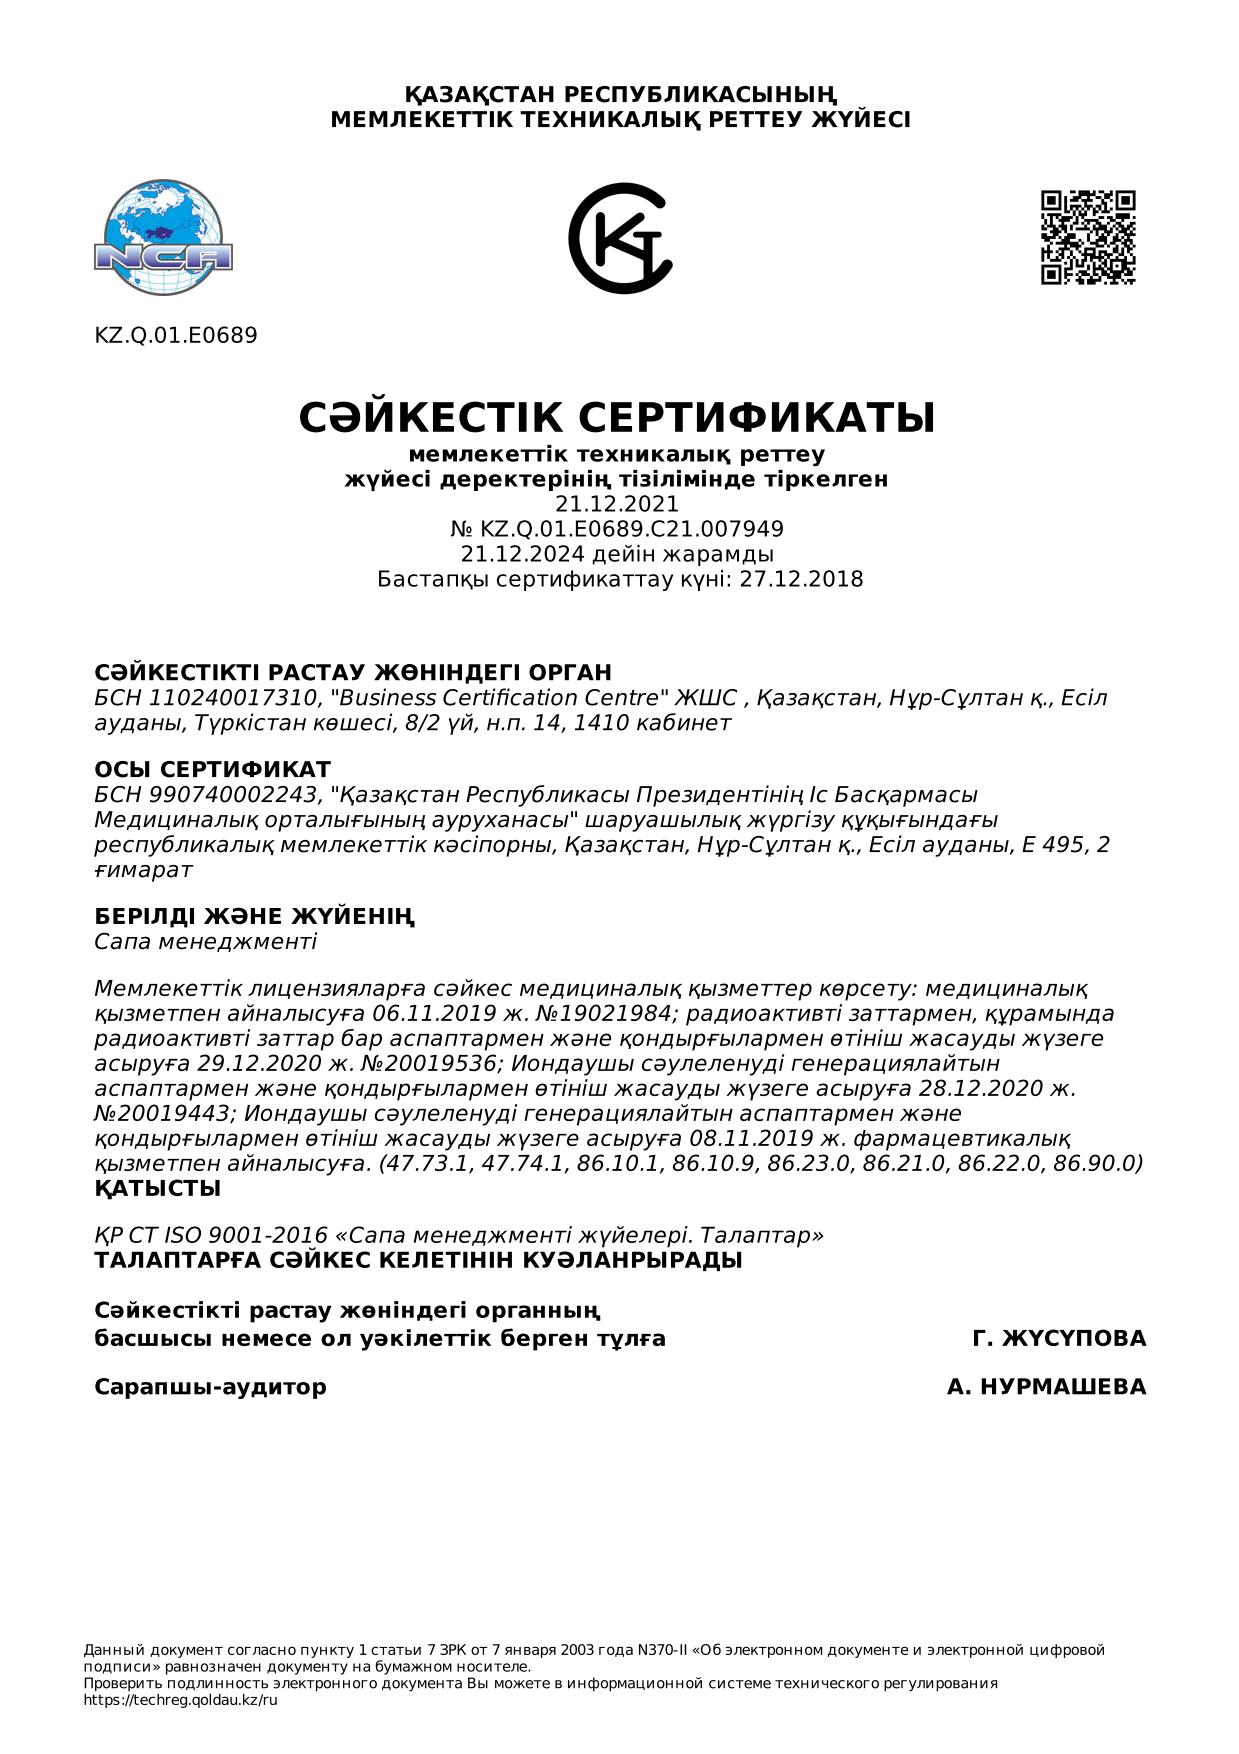 Сертификат соответствия СТ РК ISO 9001-2016 СМК БМЦ УДП РК 2021_2